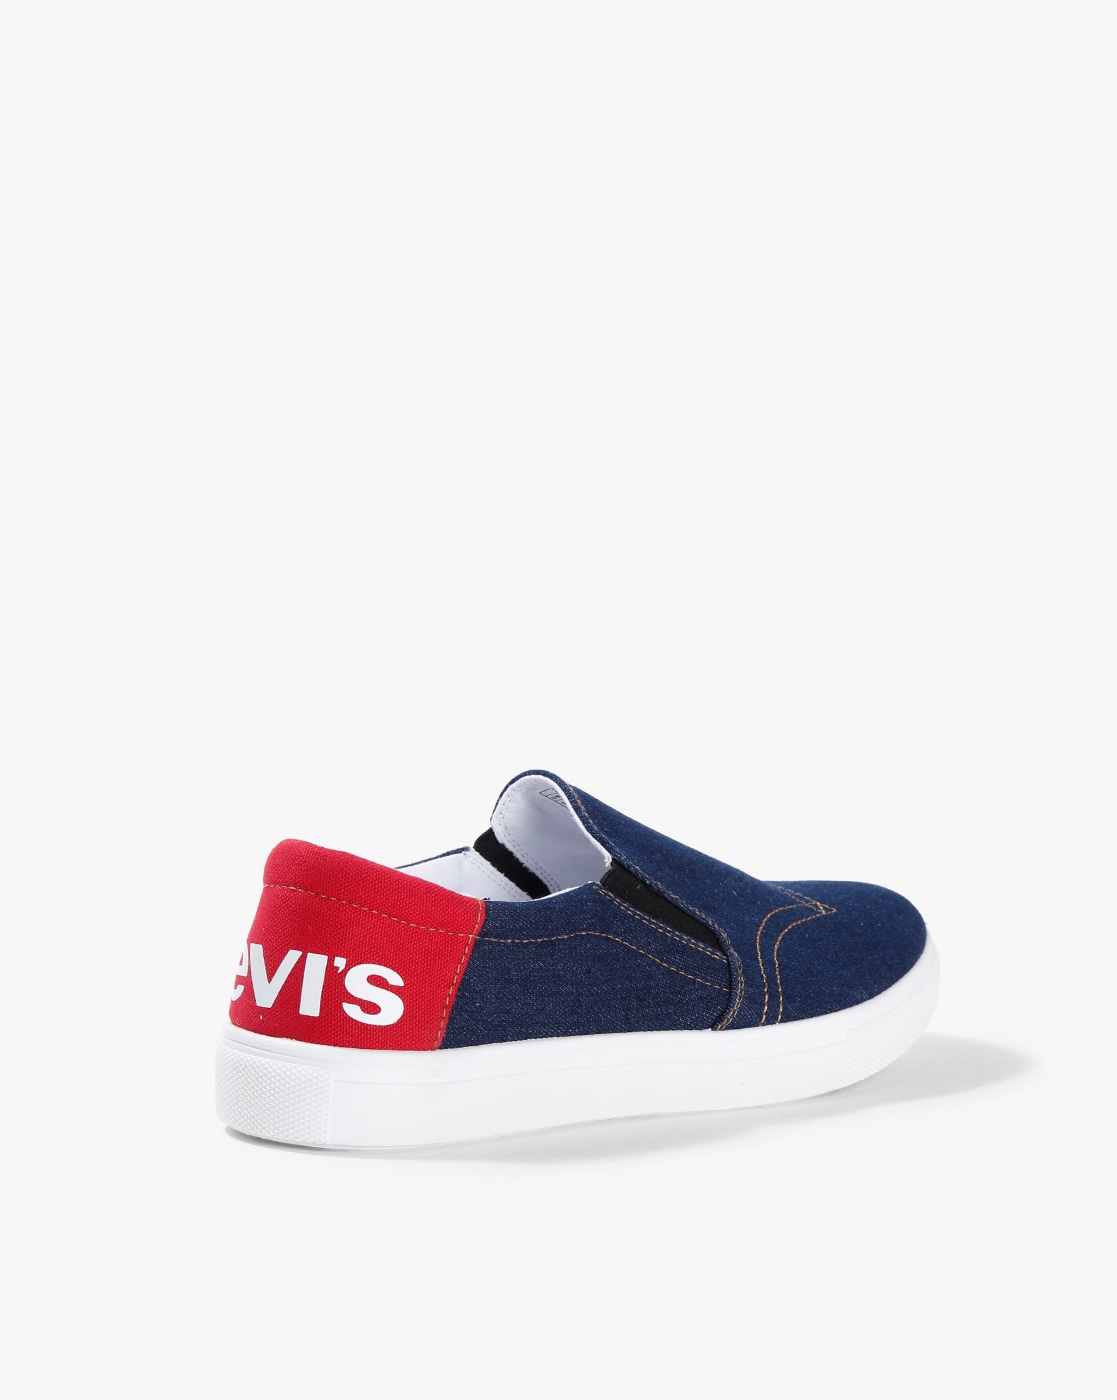 Buy Navy Blue Sneakers for Men by LEVIS Online 